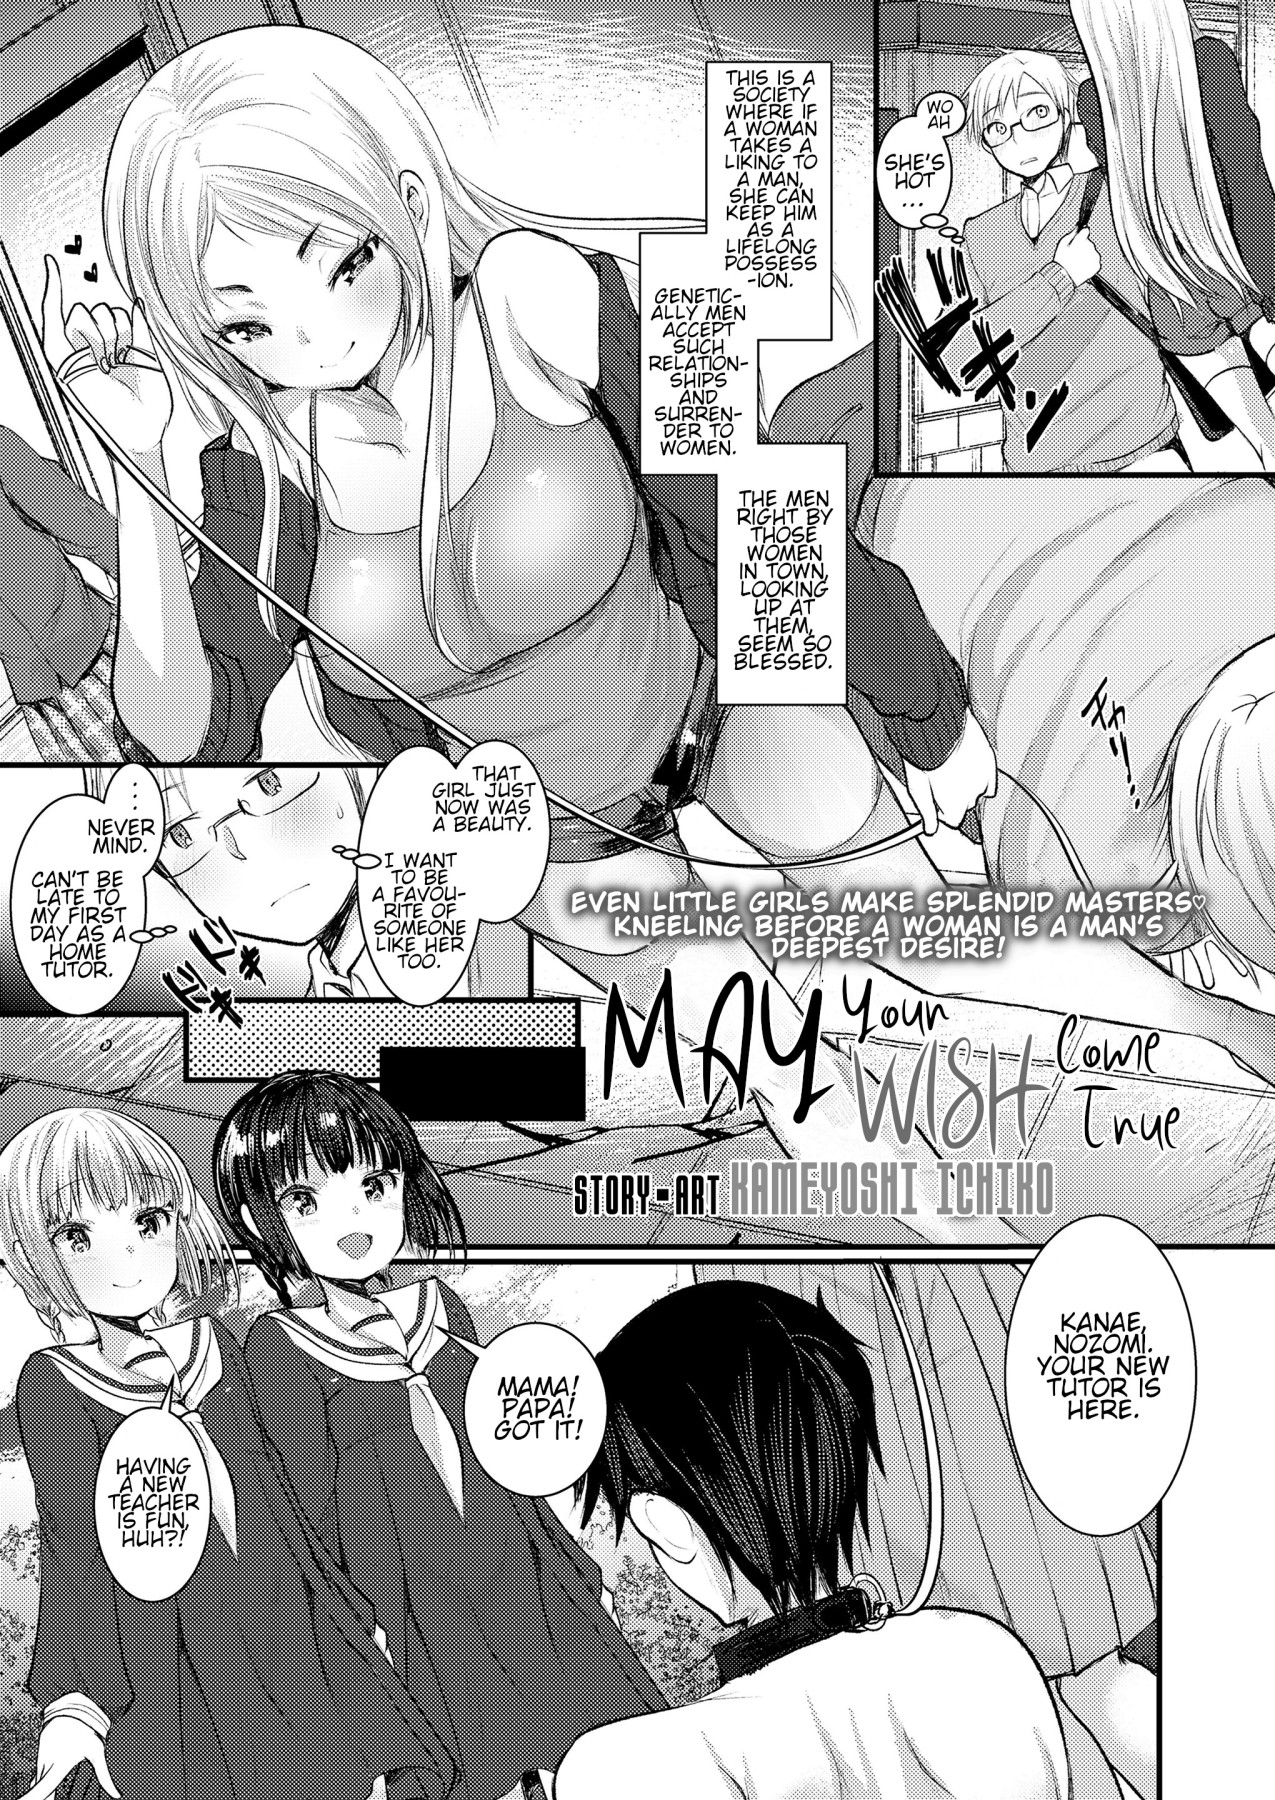 Hentai Manga Comic-May Your Wish Come True-Read-1